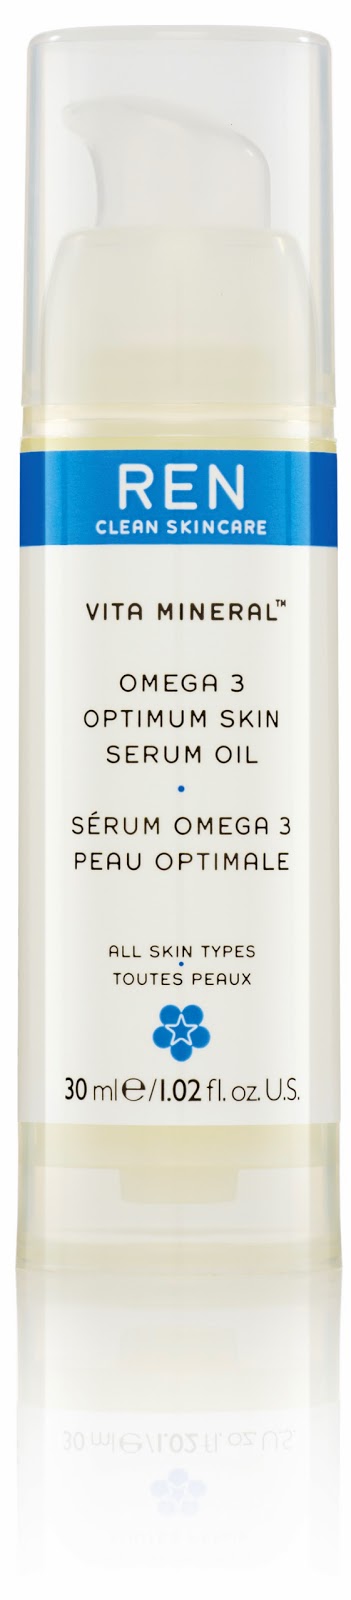 REN Omega 3 Optimum Skin Serum Oil